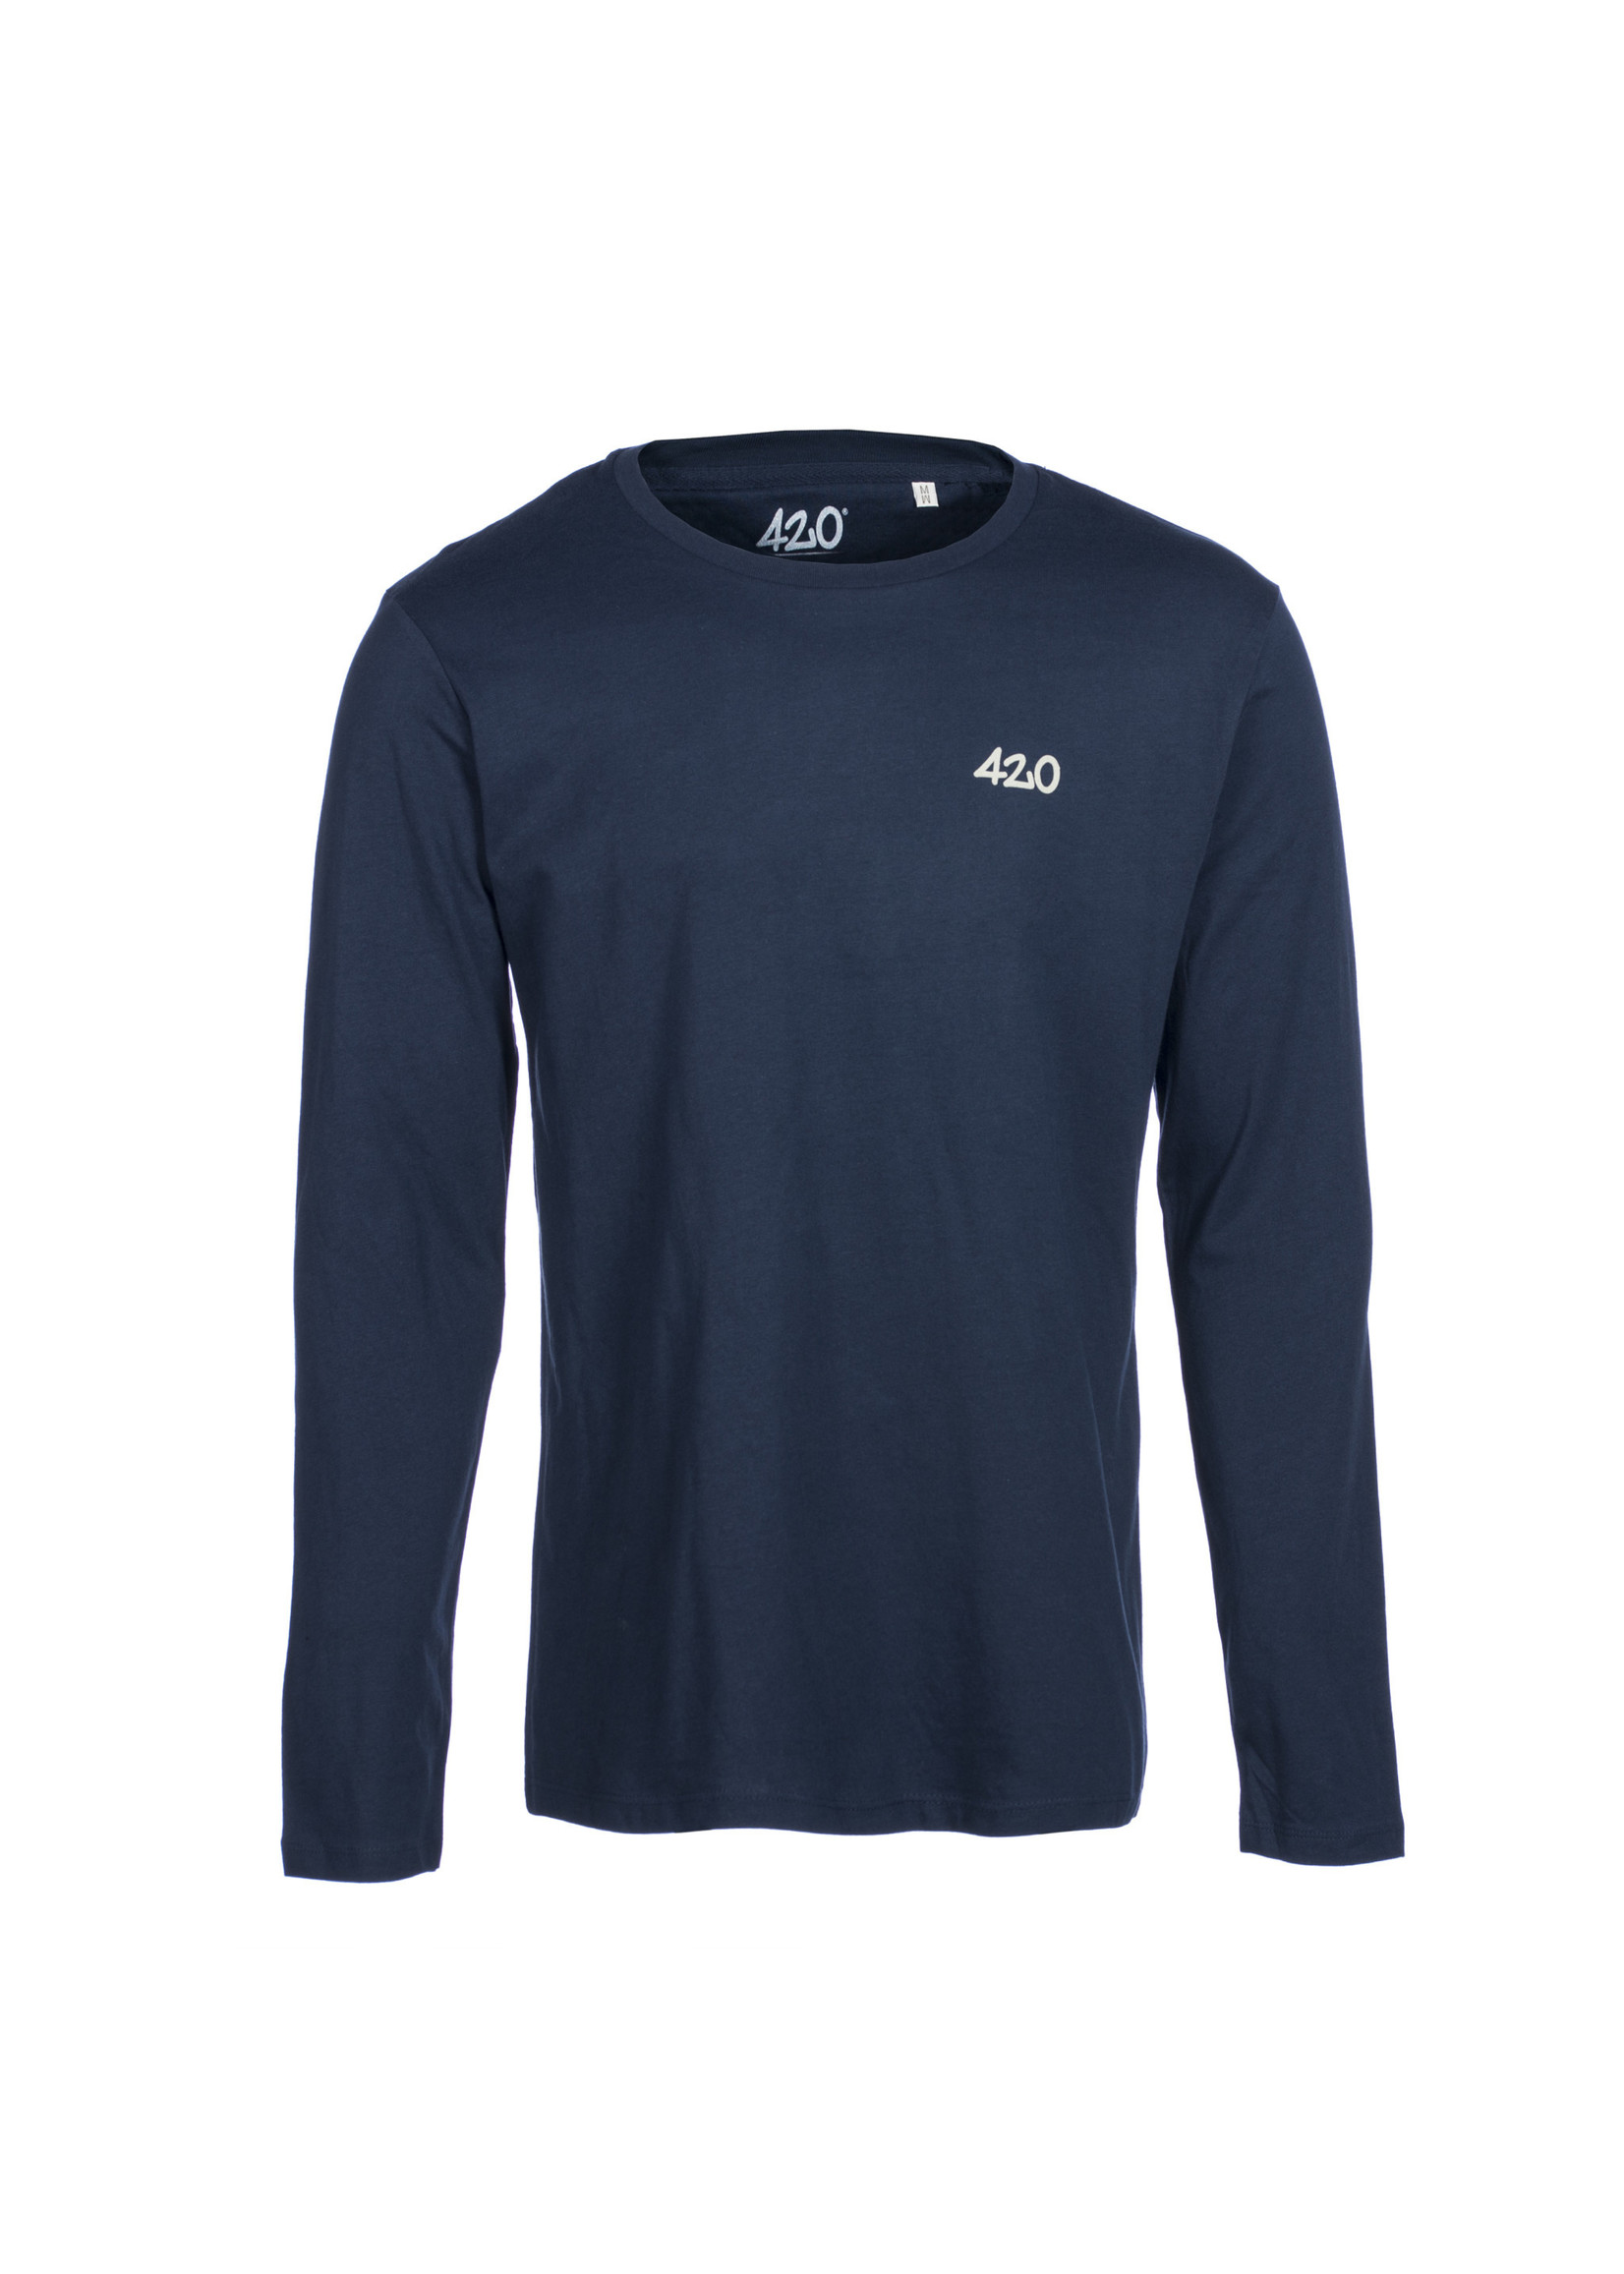 420 Original Clothing Farm T-shirt 420 long-sleeve blue